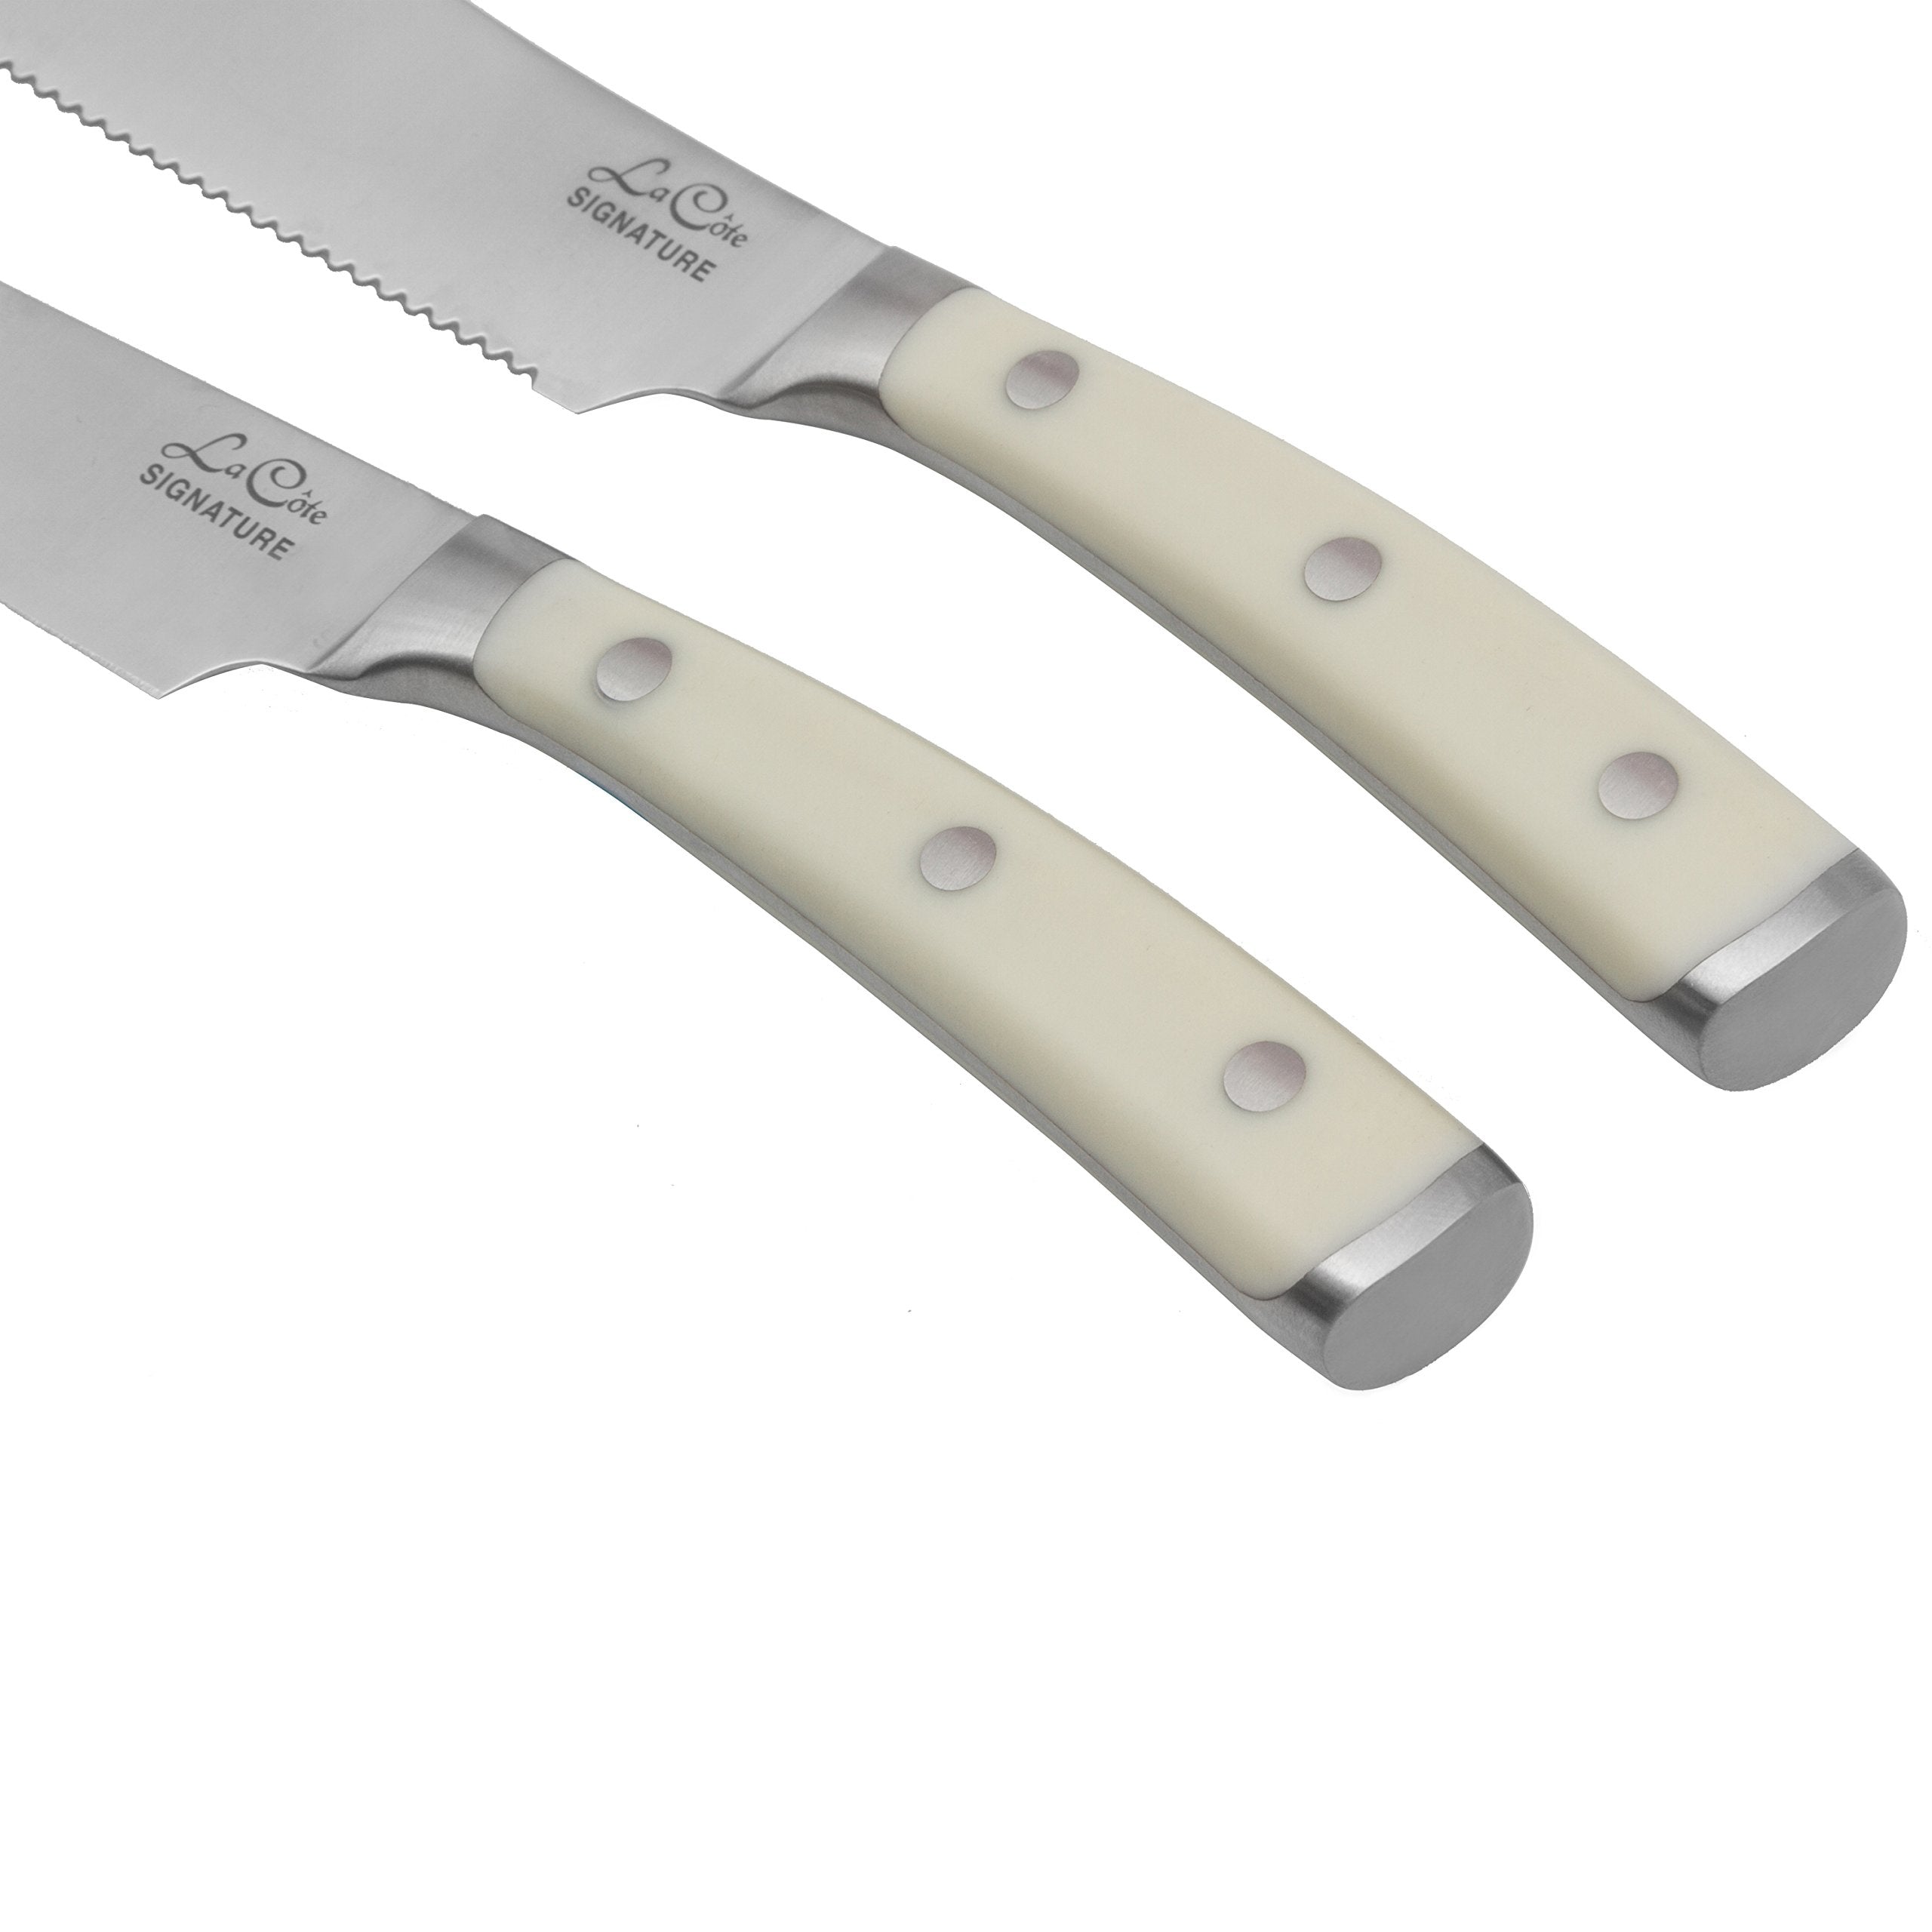 La Cote Signature Series Knife Set High Carbon German Steel ABS Handle (Cheese & Bread Knife Set)